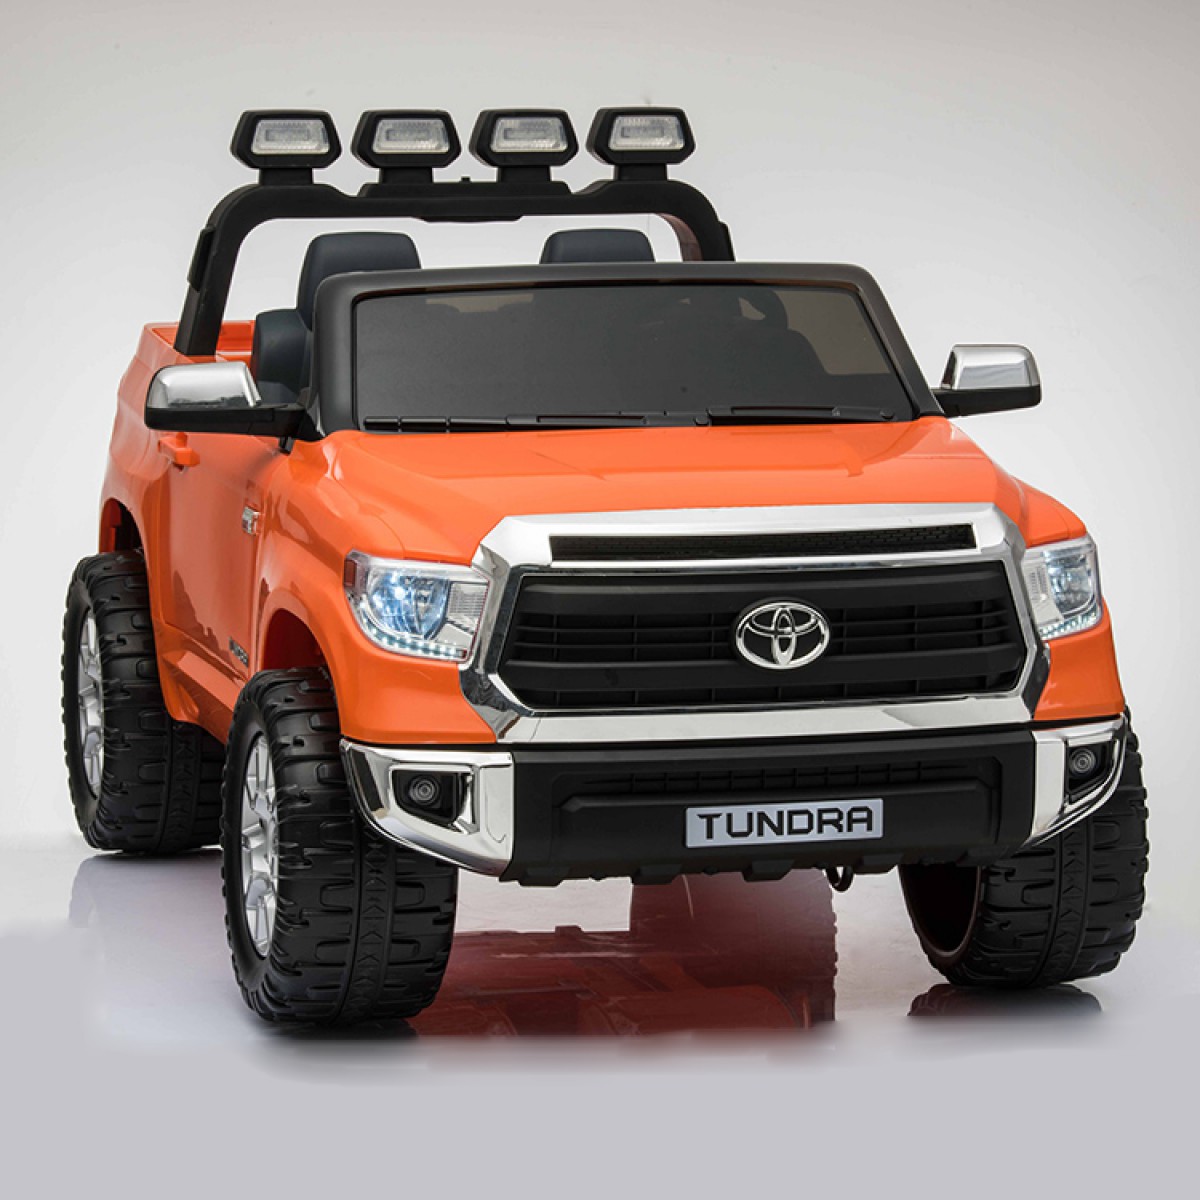 Электромобиль Toyota Tundra Mini оранжевого цвета  